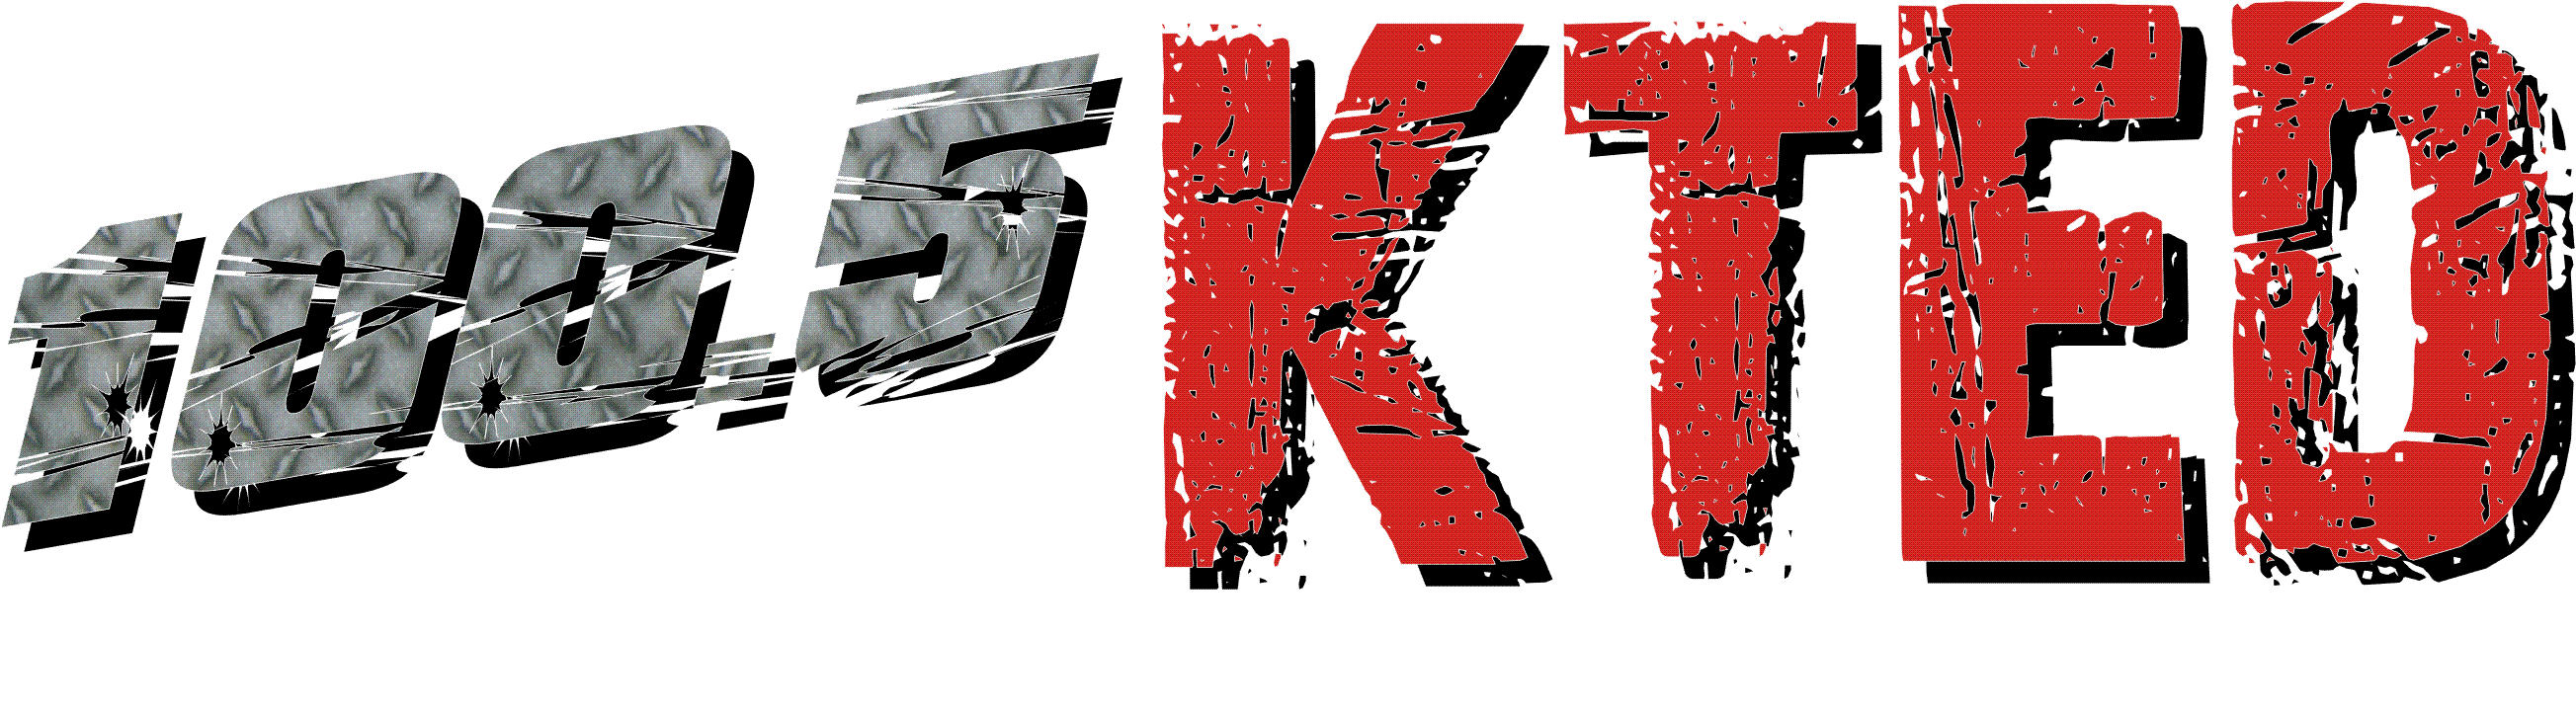 KTED logo - no background.jpg